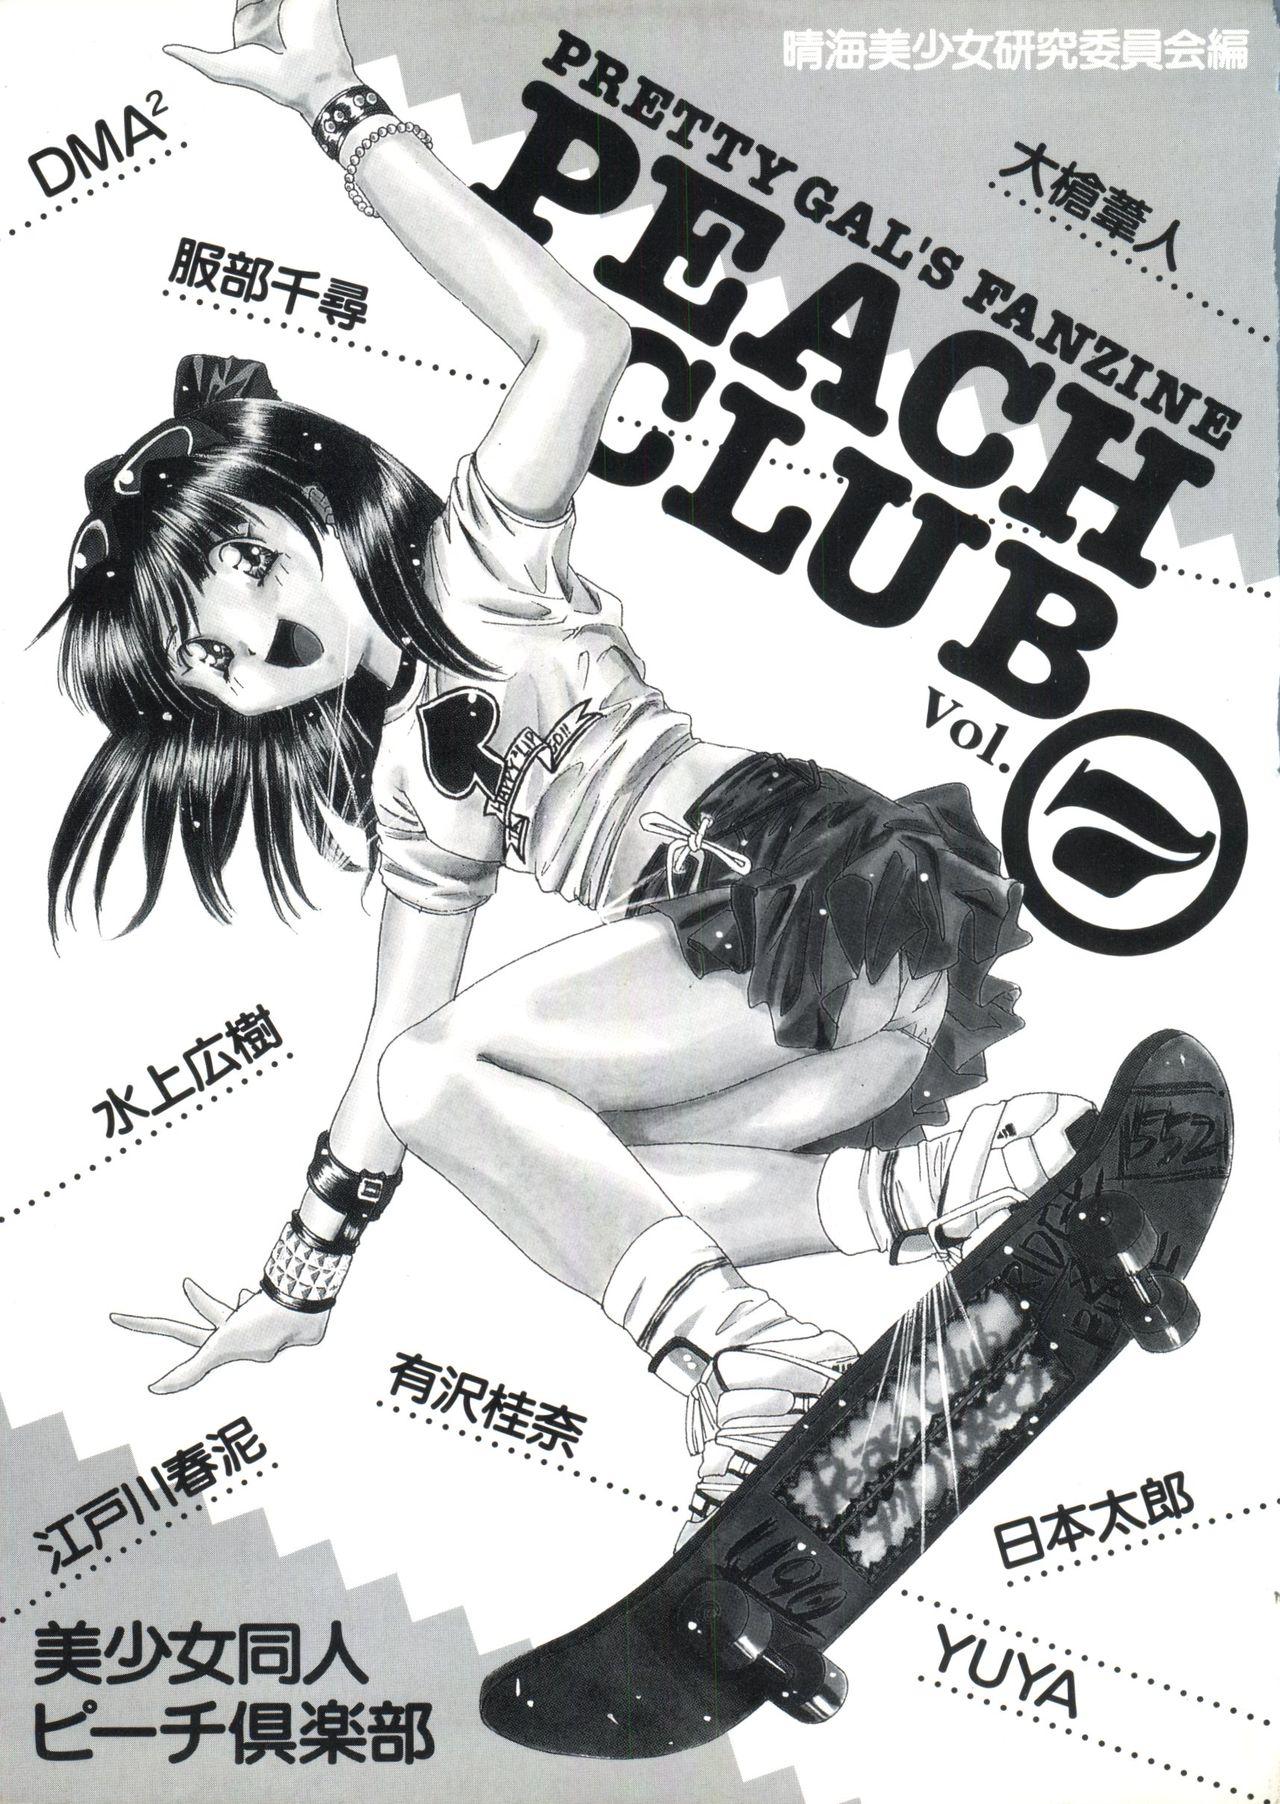 Bishoujo Doujin Peach Club - Pretty Gal's Fanzine Peach Club 7 1